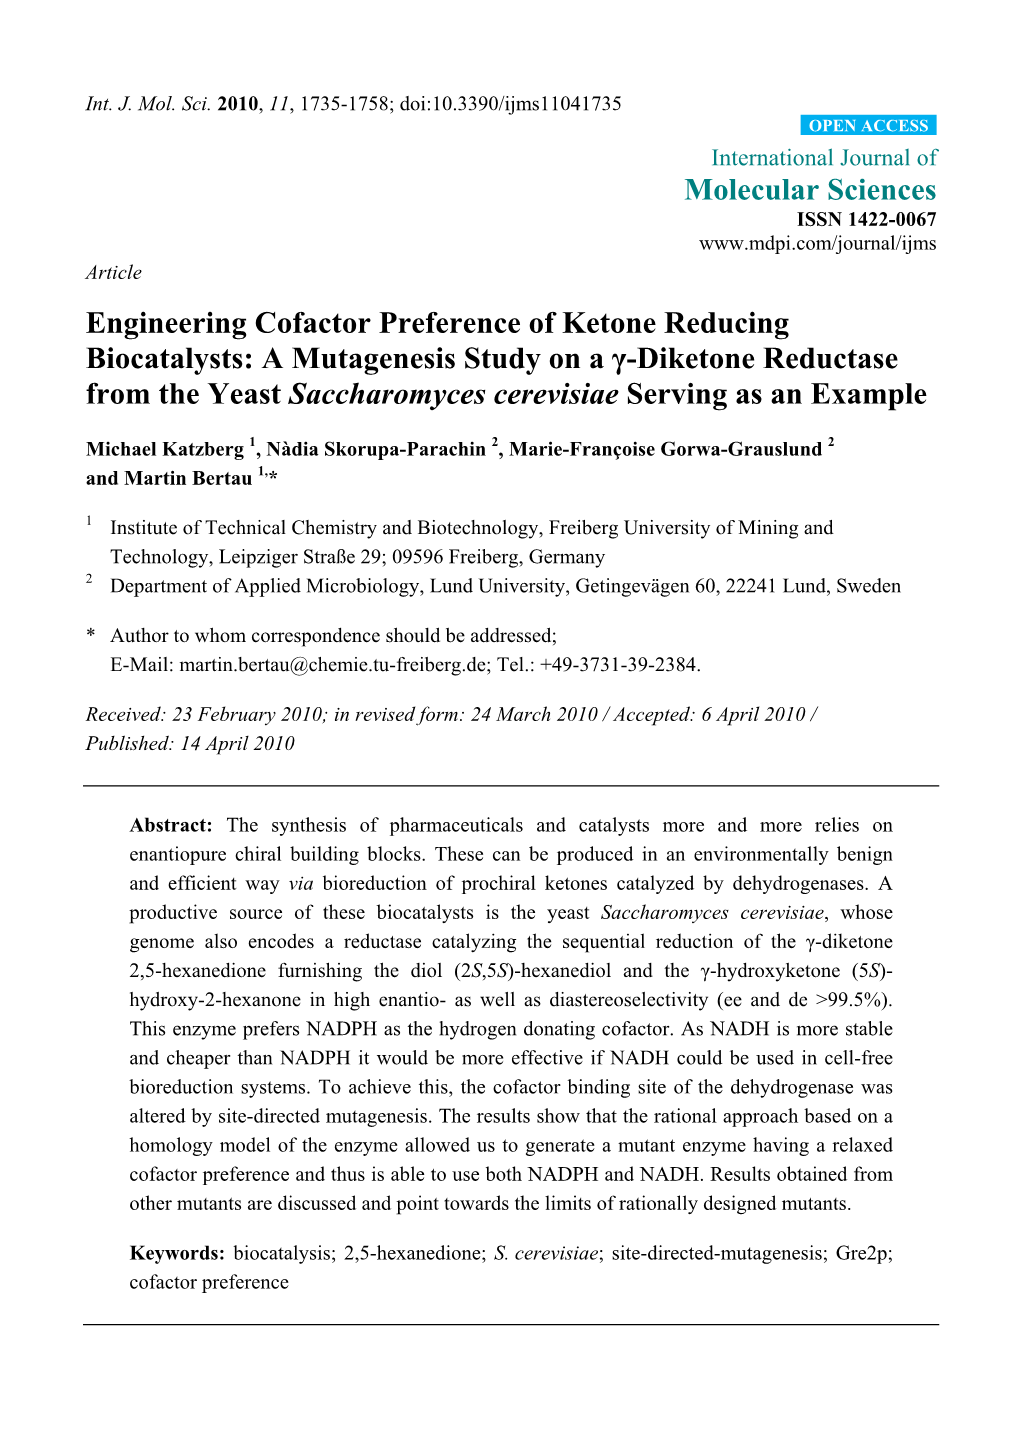 Engineering Cofactor Preference of Ketone Reducing Biocatalysts: A